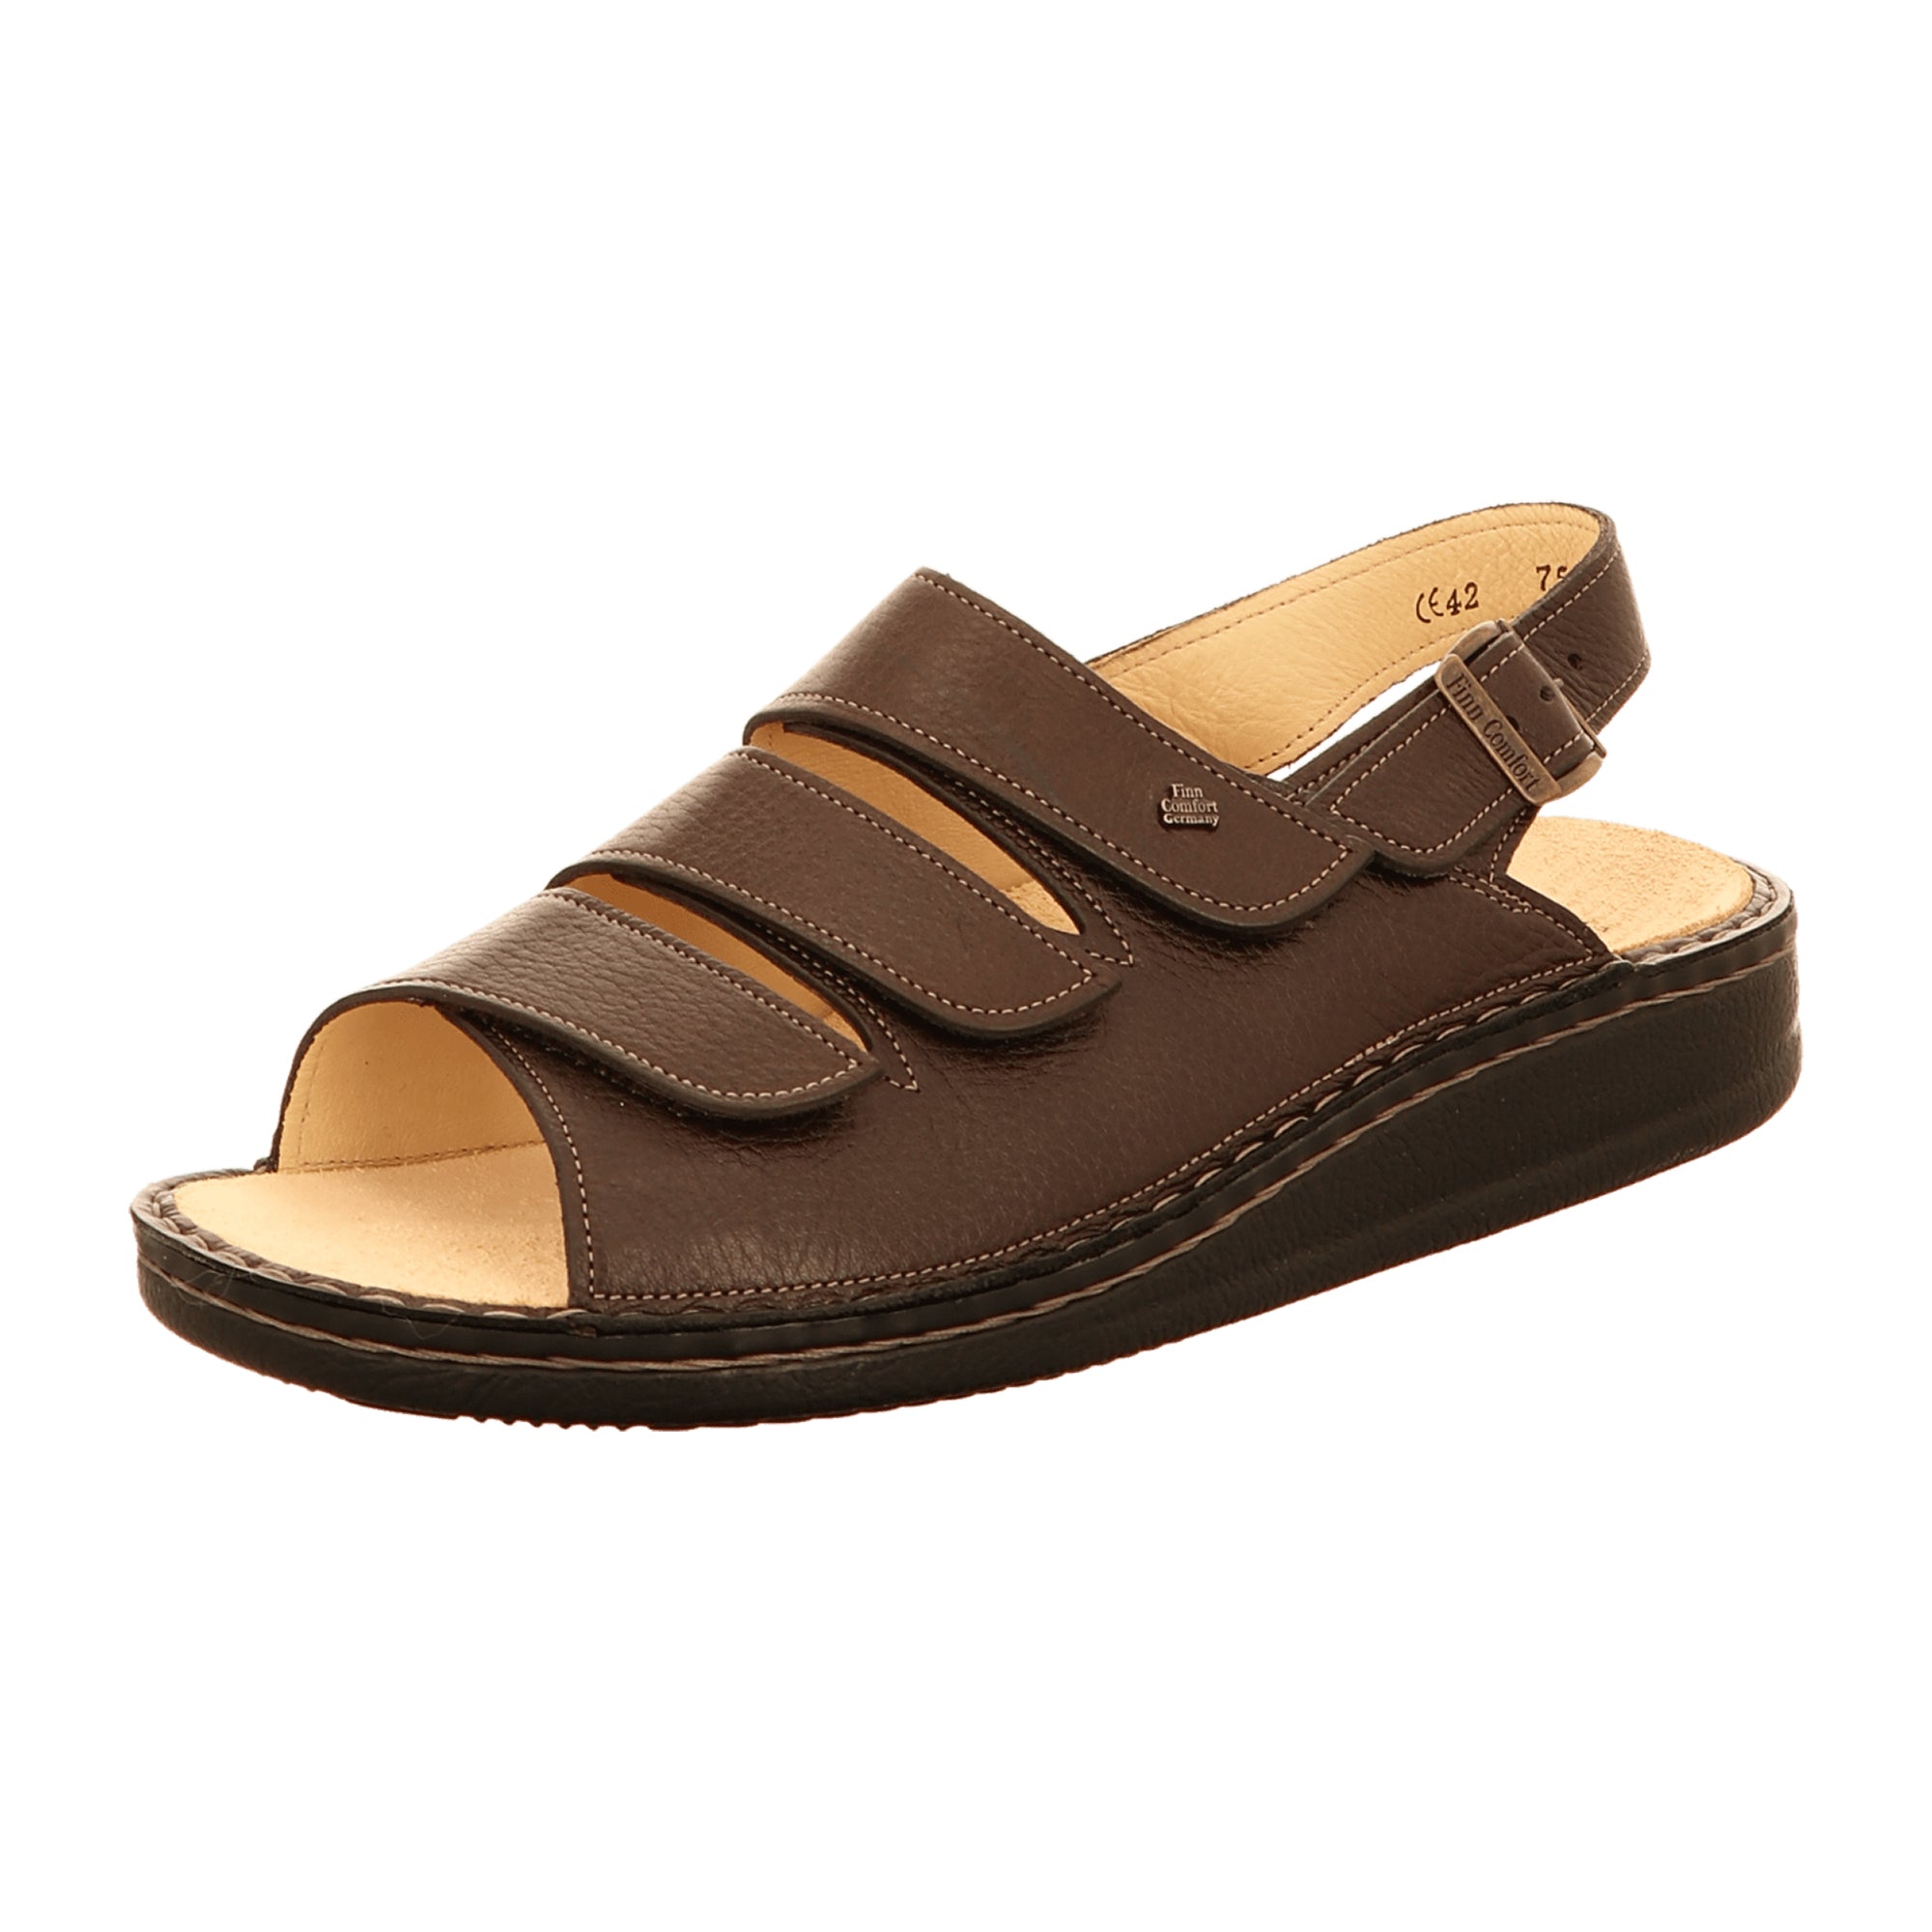 Finn Comfort Sylt Men's Sandals - Durable & Stylish in Brown